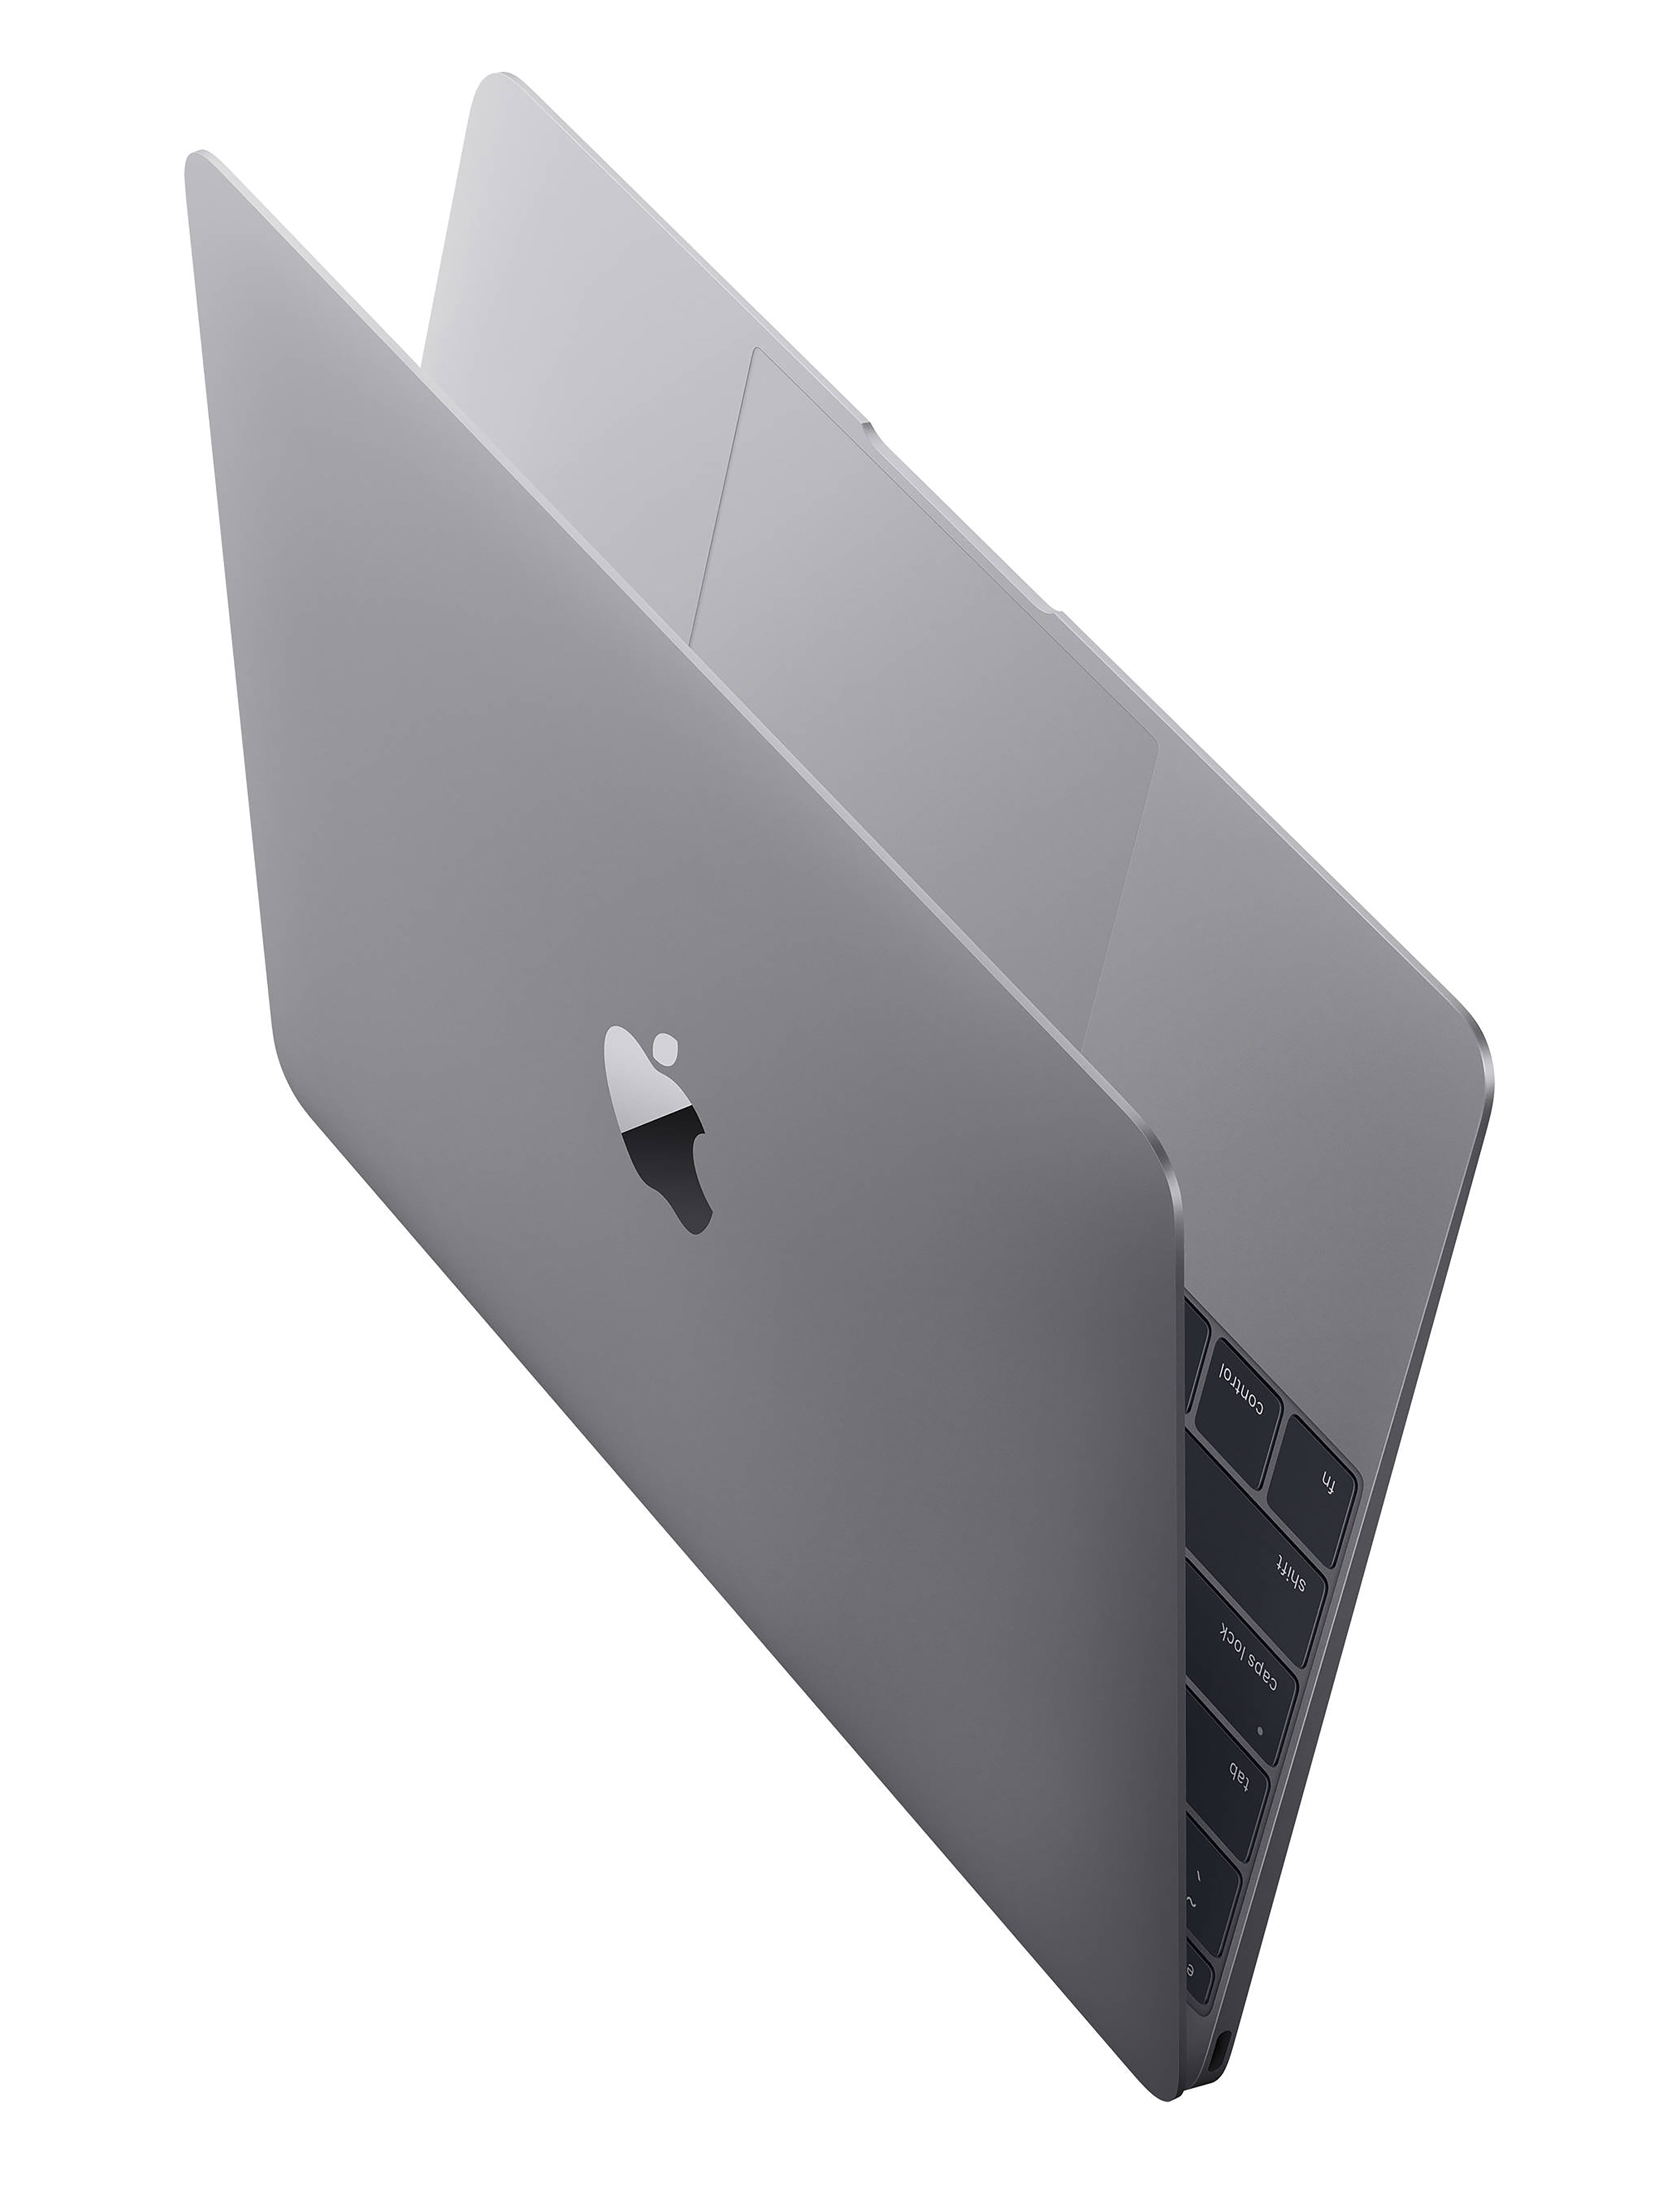 Restored Apple Macbook 12-inch Retina Display Intel Core m3 256GB - Space  Gray (Early 2016) (Refurbished)